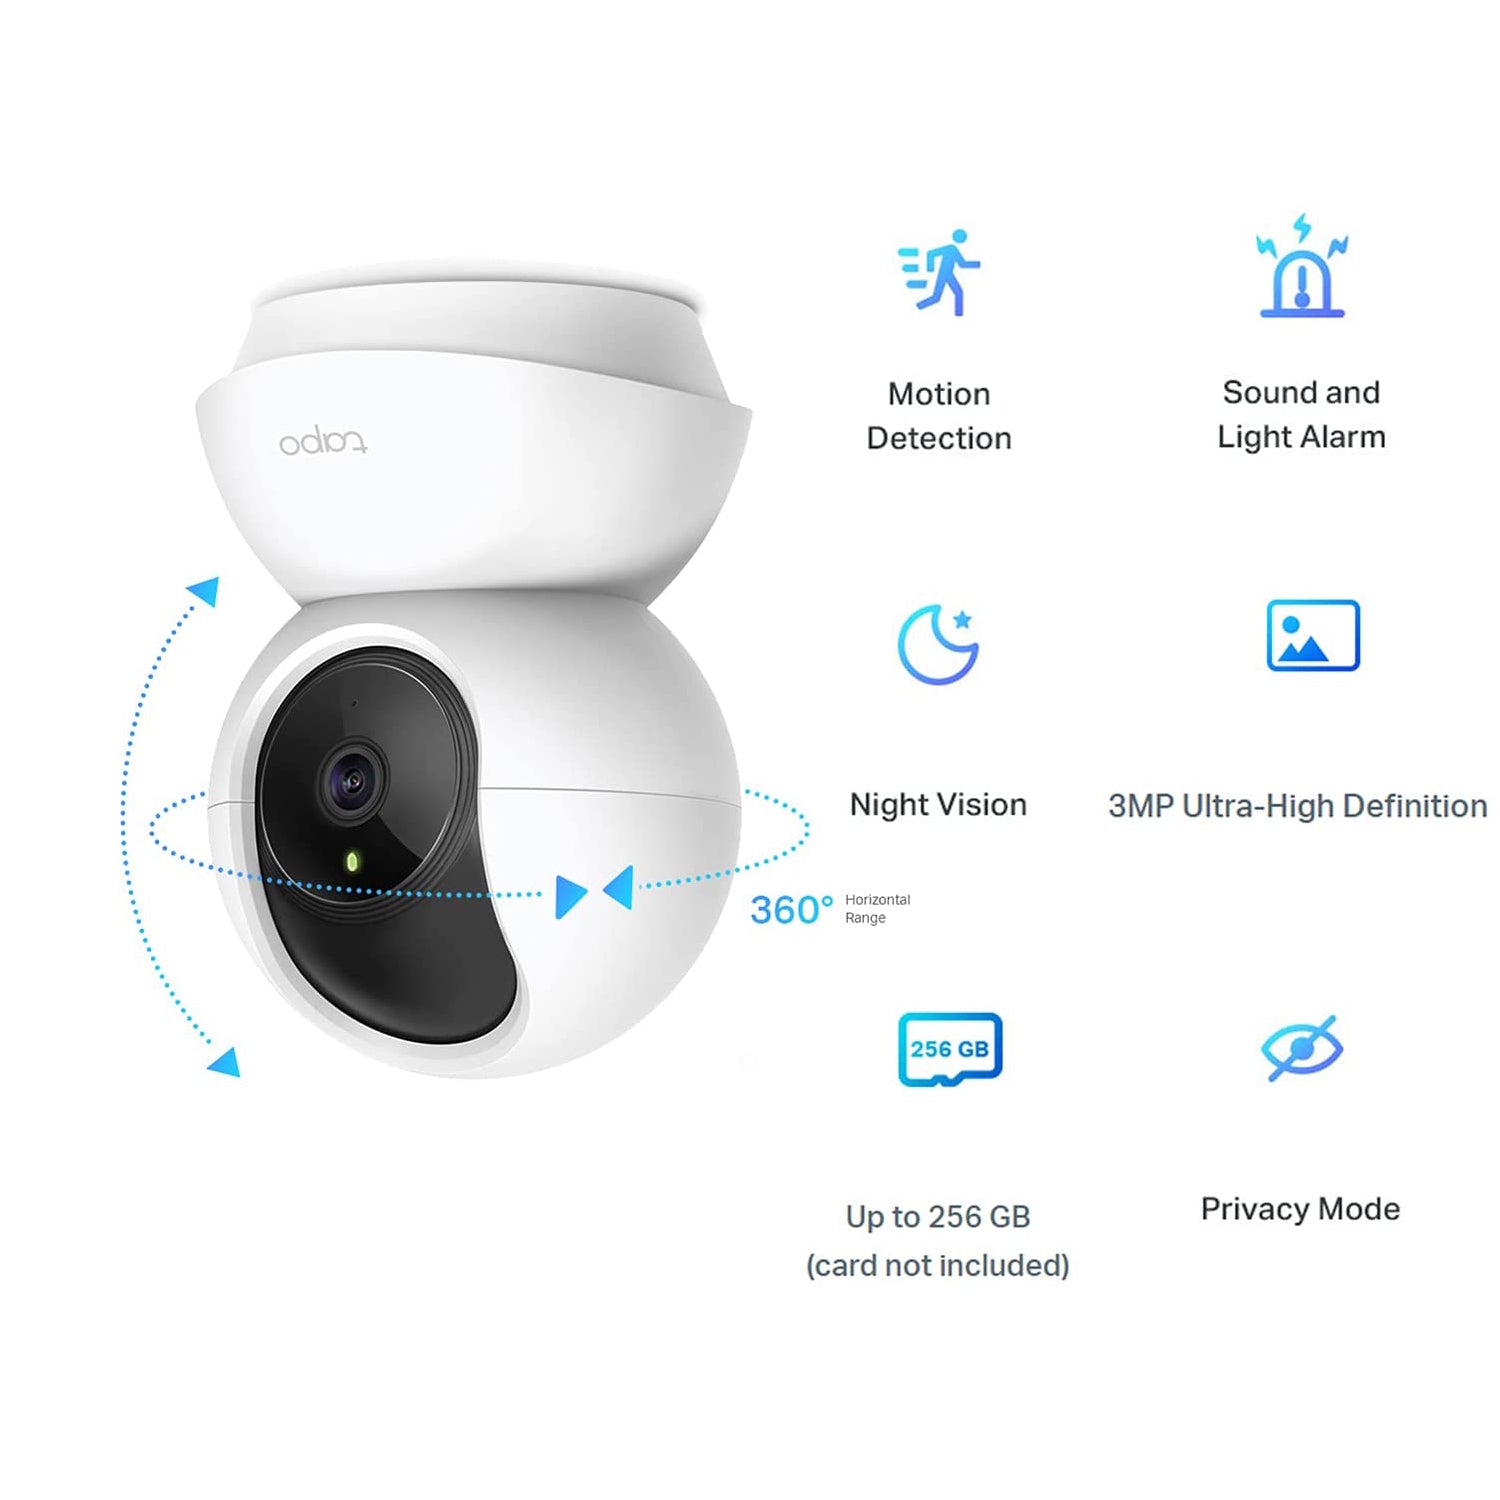 Tapo Pan/Tilt Smart Security Camera 360°, 3MP High Definition, 2-way Audio (Tapo C210)